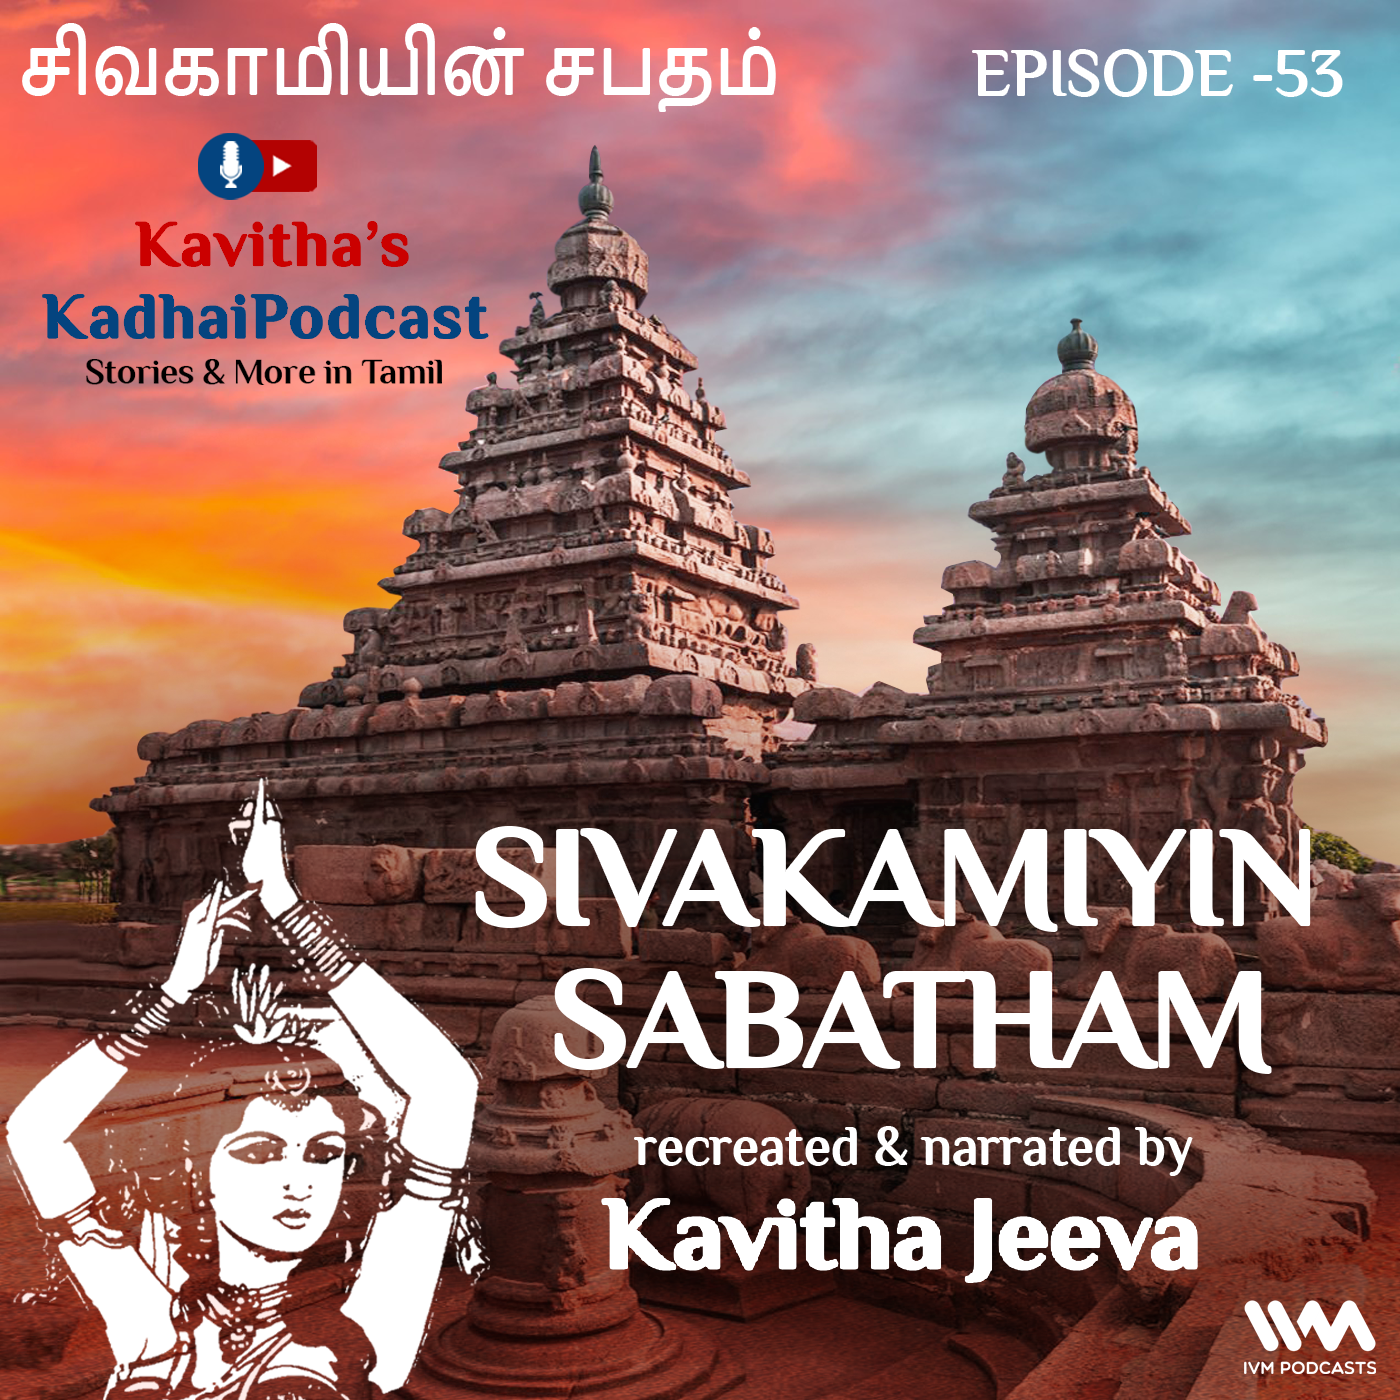 KadhaiPodcast’s Sivakamiyin Sabatham - Episode # 53